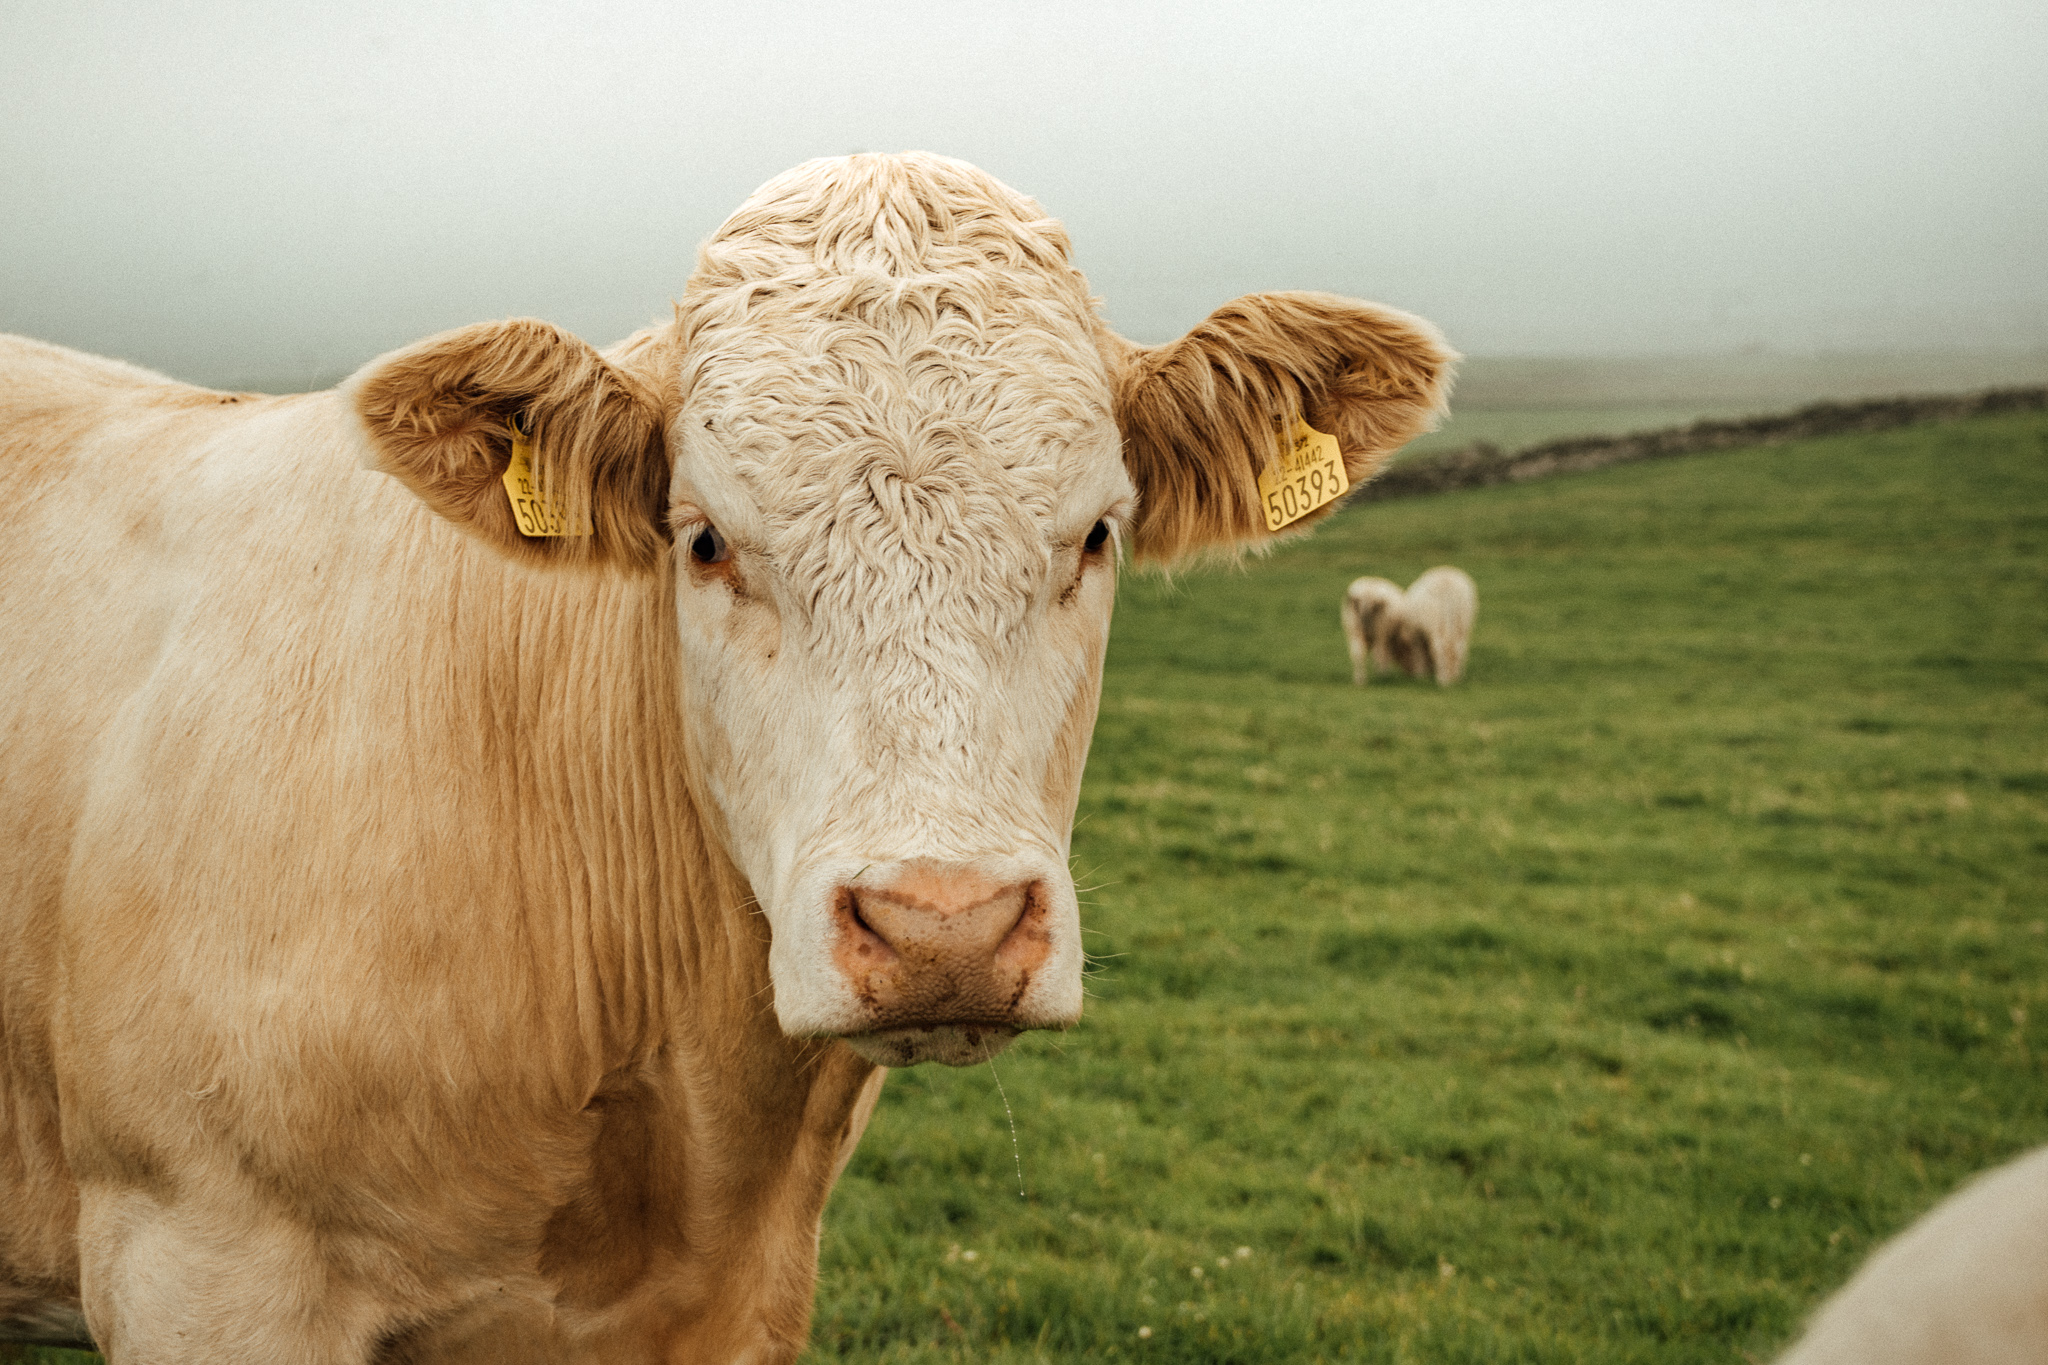 a cow in a grassy field in ireland